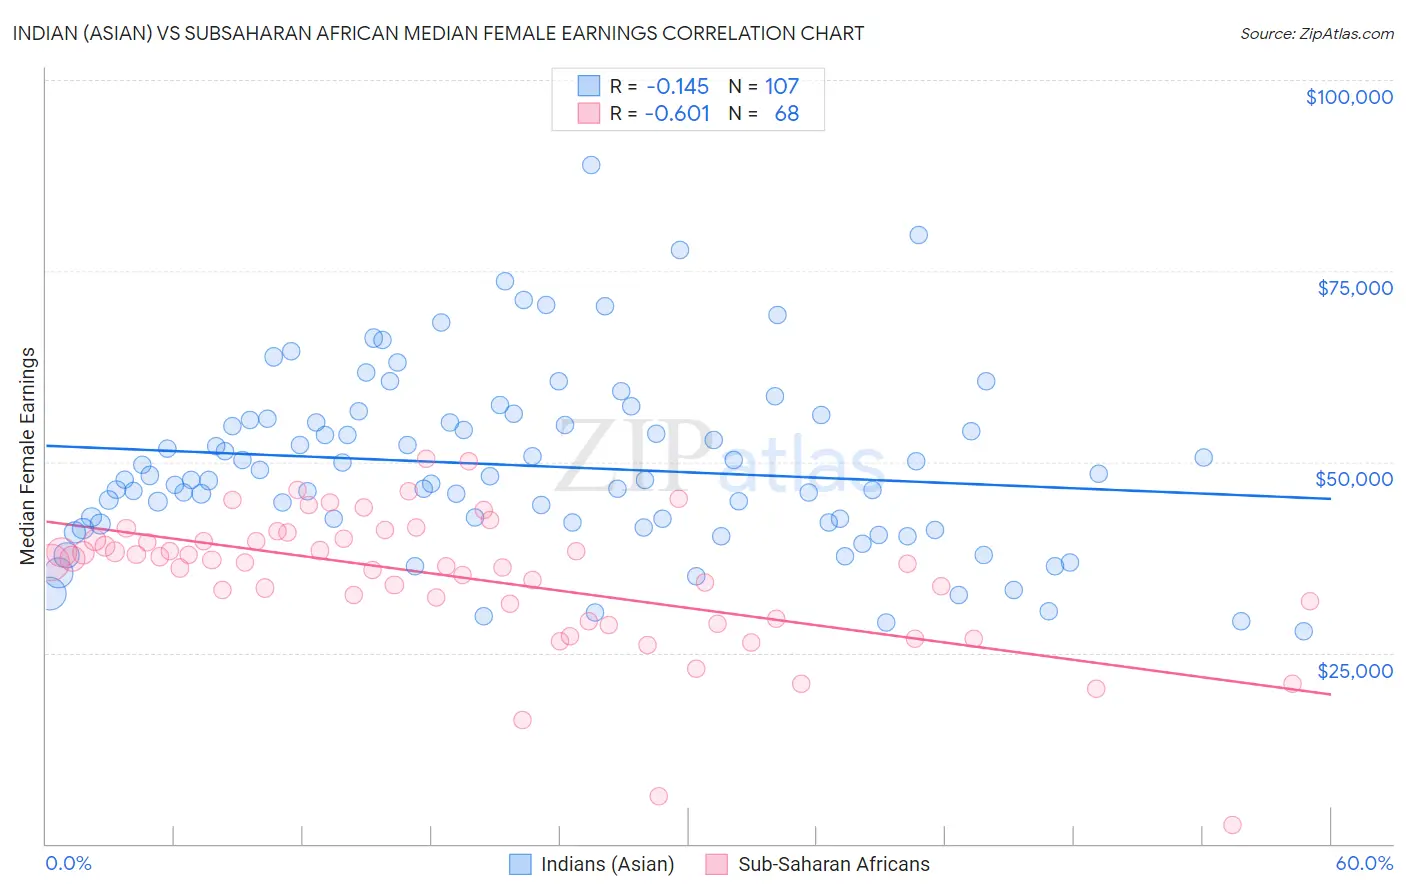 Indian (Asian) vs Subsaharan African Median Female Earnings